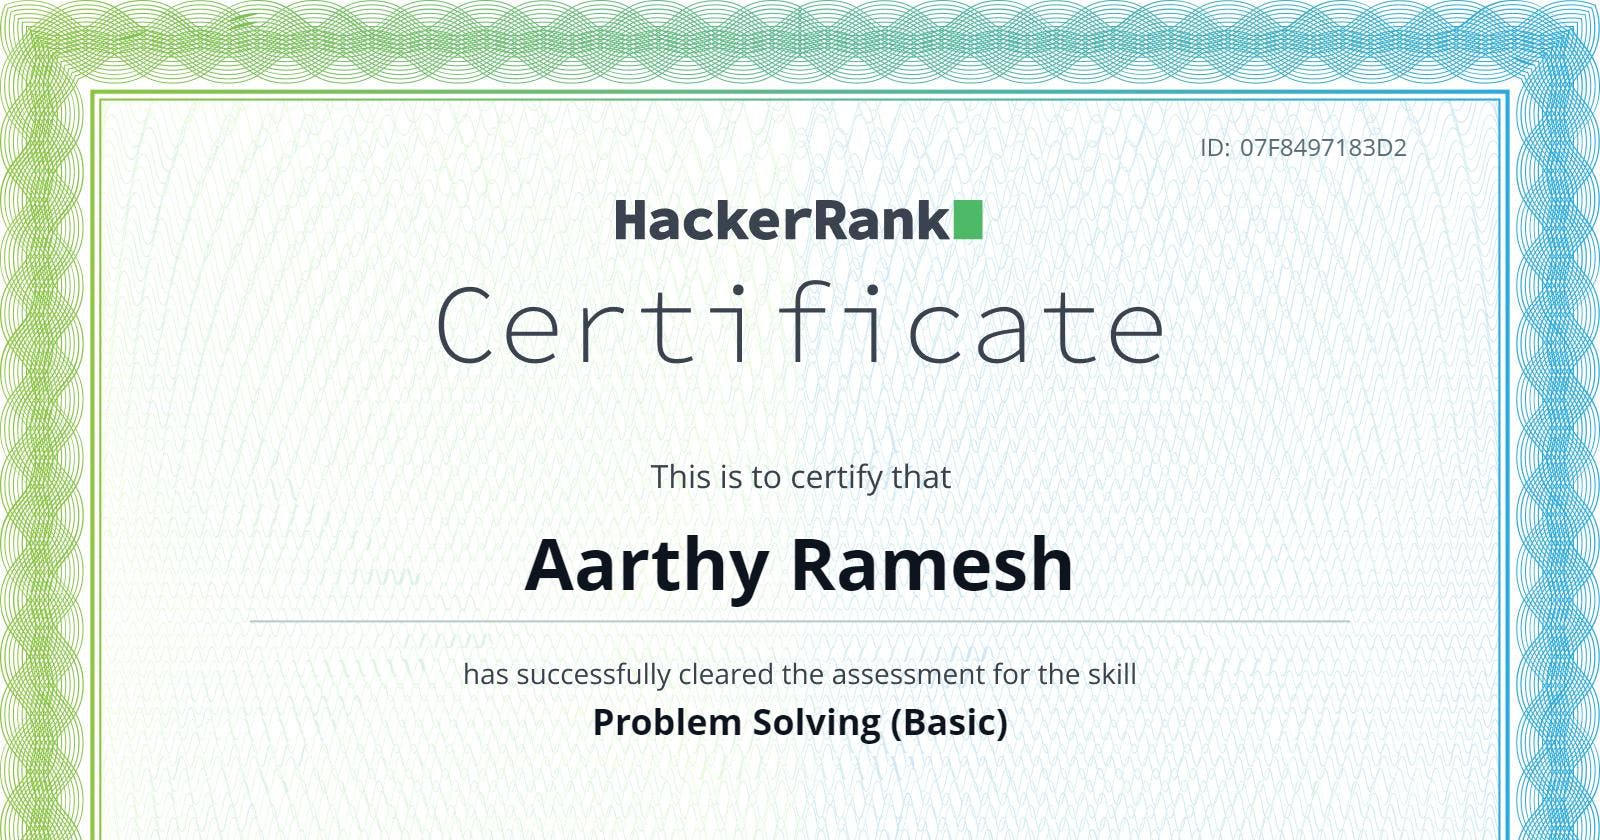 Hackerrank - Problem solving (basic) certification.